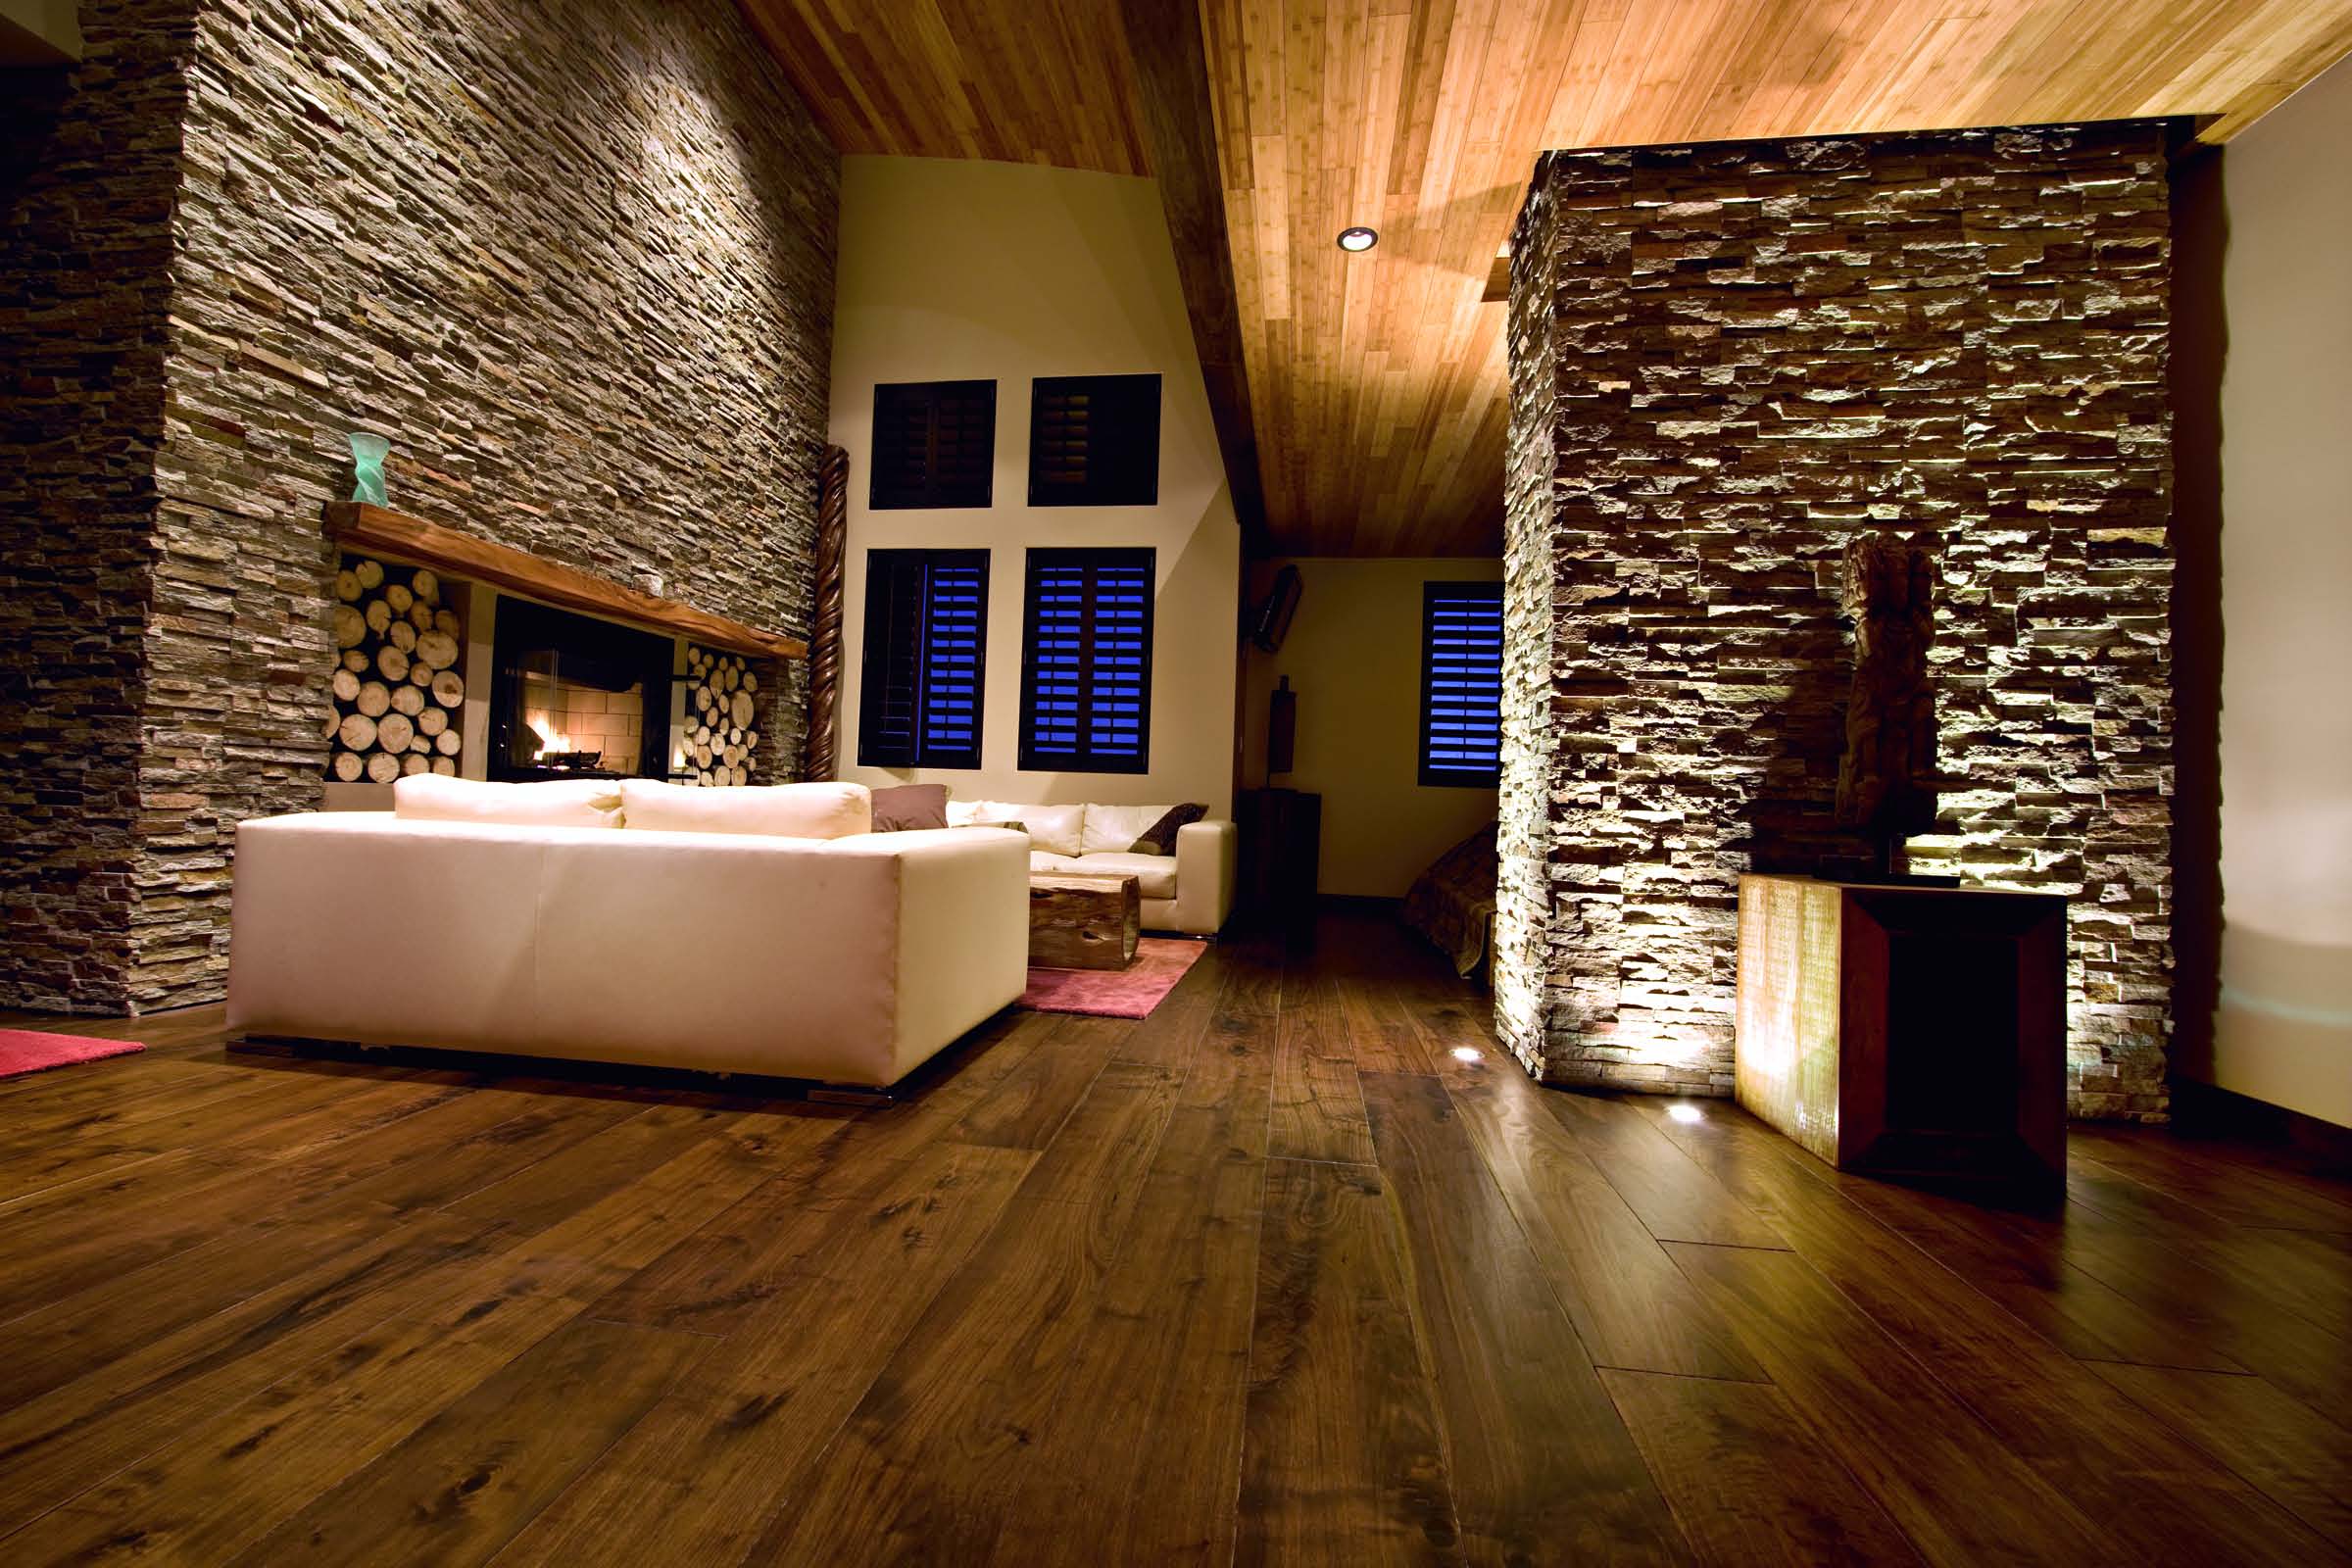 stone floor living room